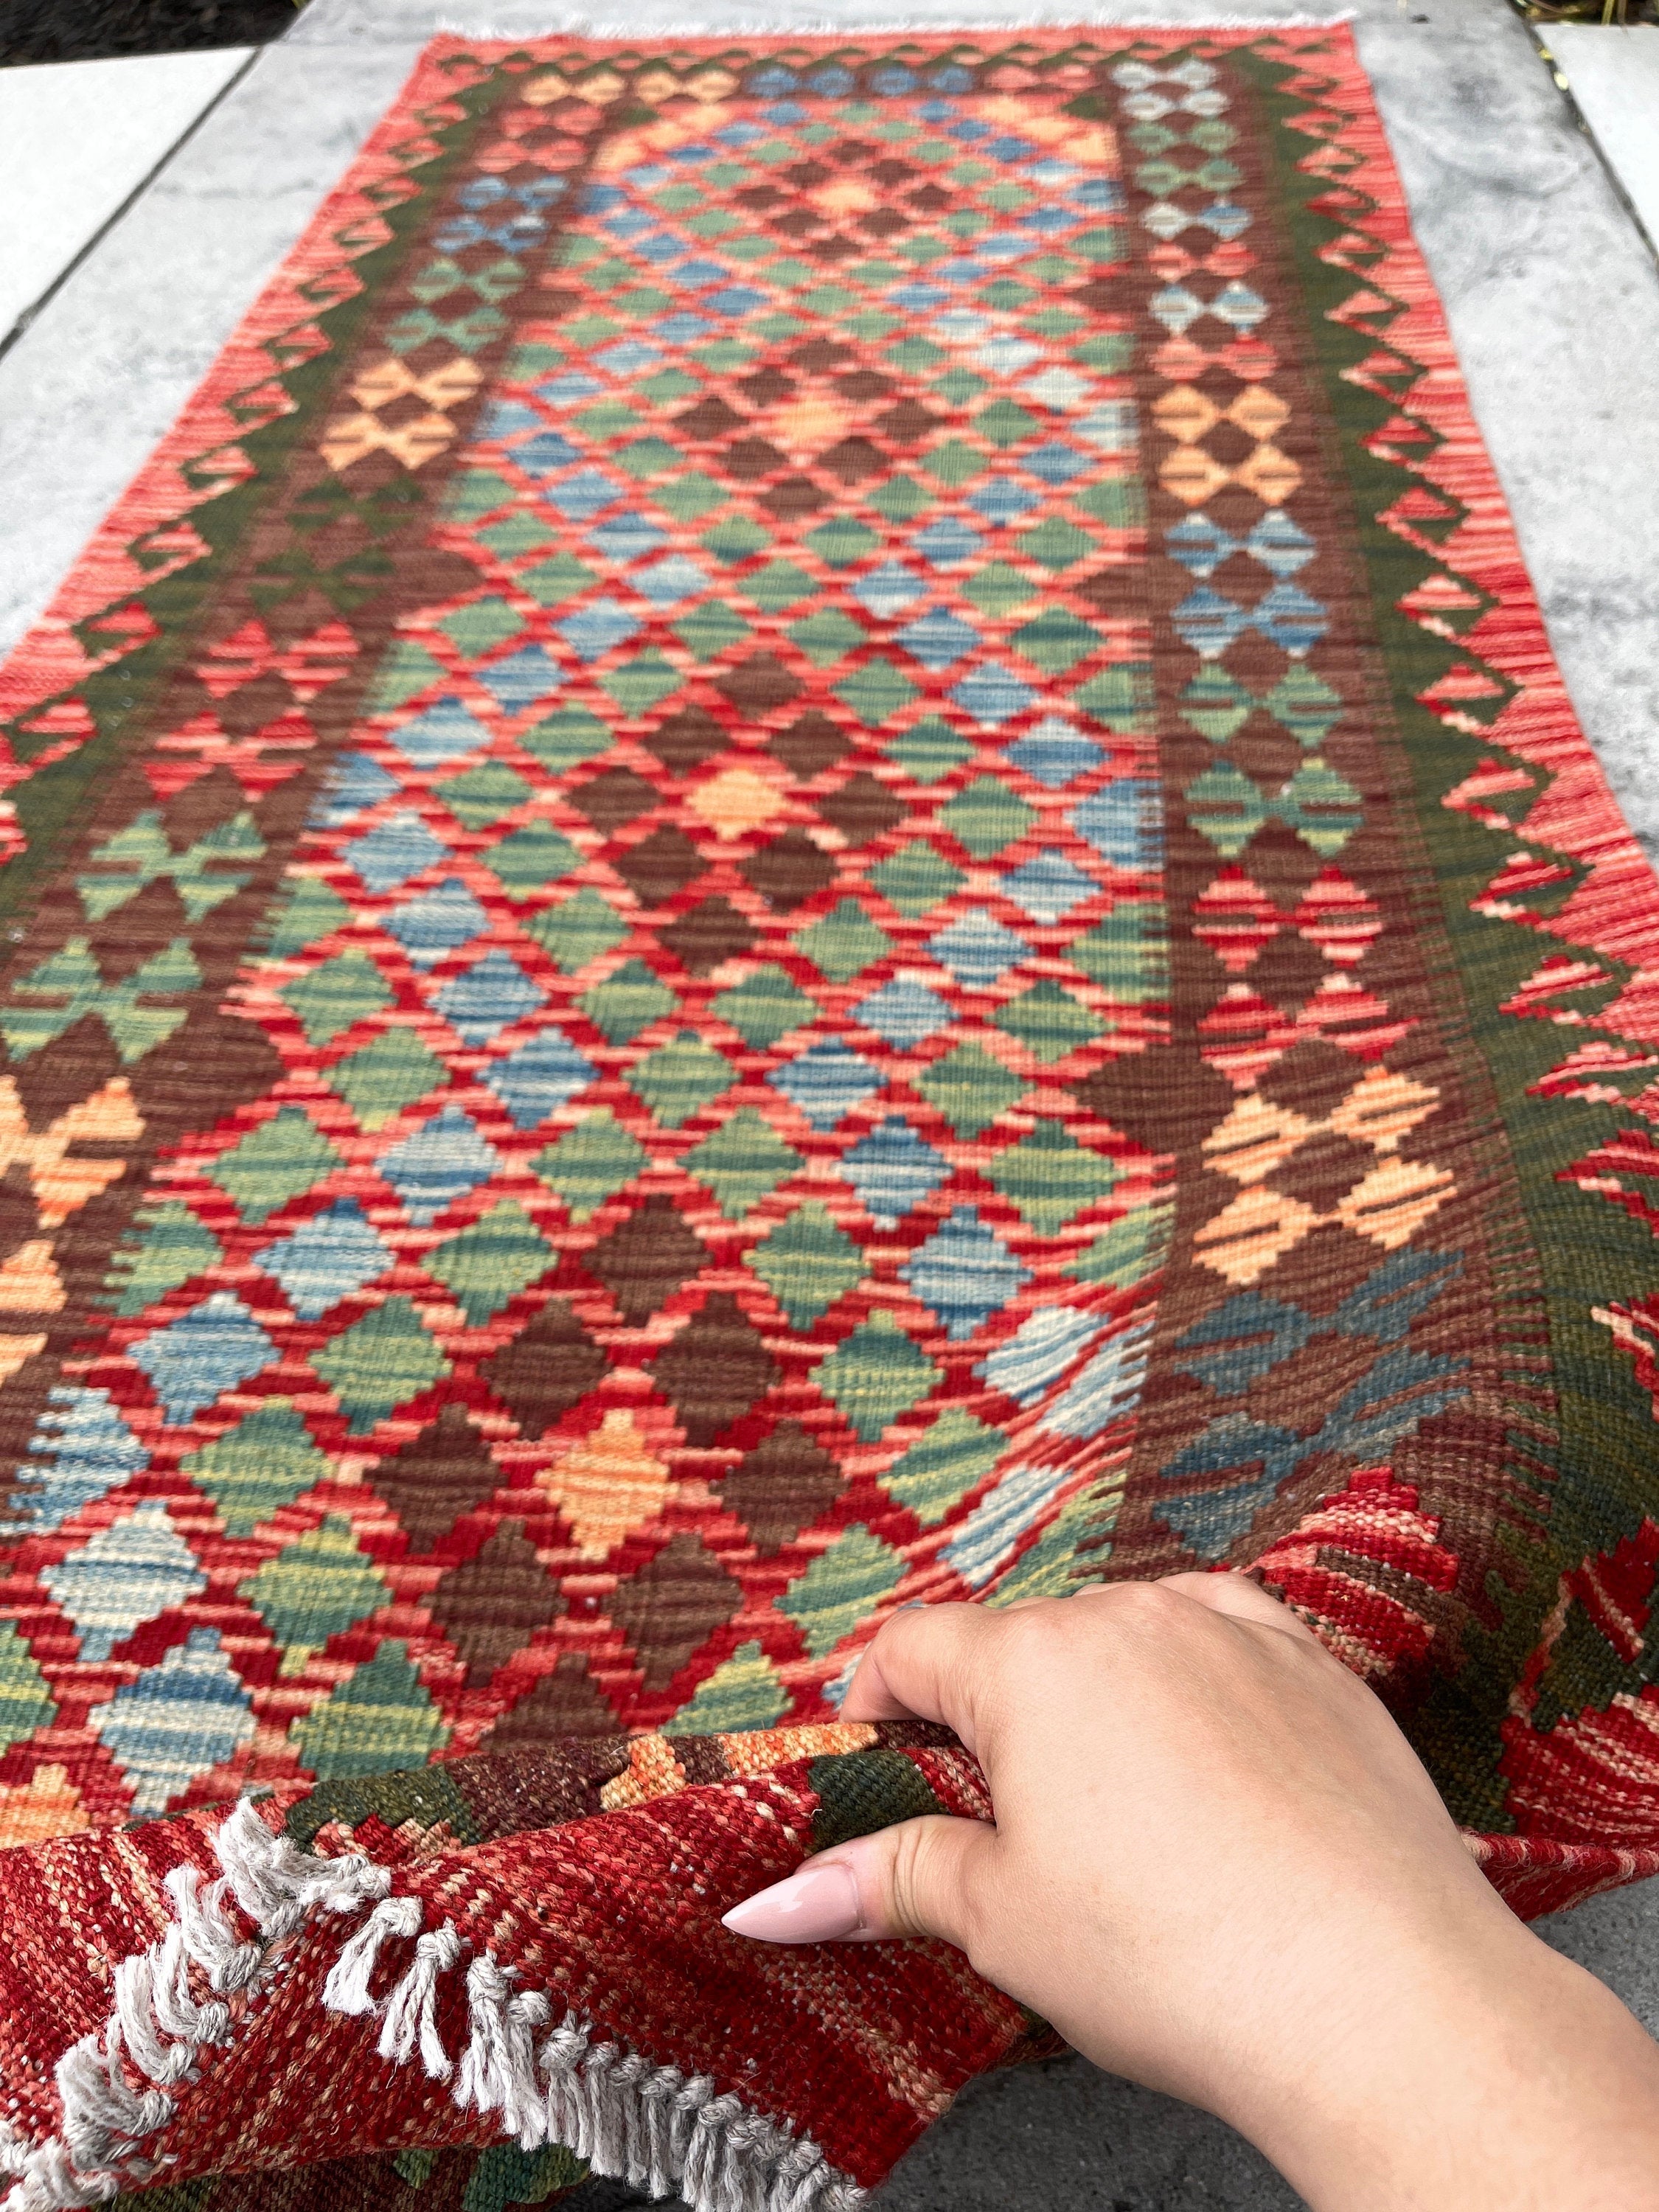 3x7 (100x200) Handmade Afghan Kilim Flatweave Rug | Red Orange Brown Teal Ivory Orange Green | Boho Bohemian Outdoor Tribal Turkish Moroccan